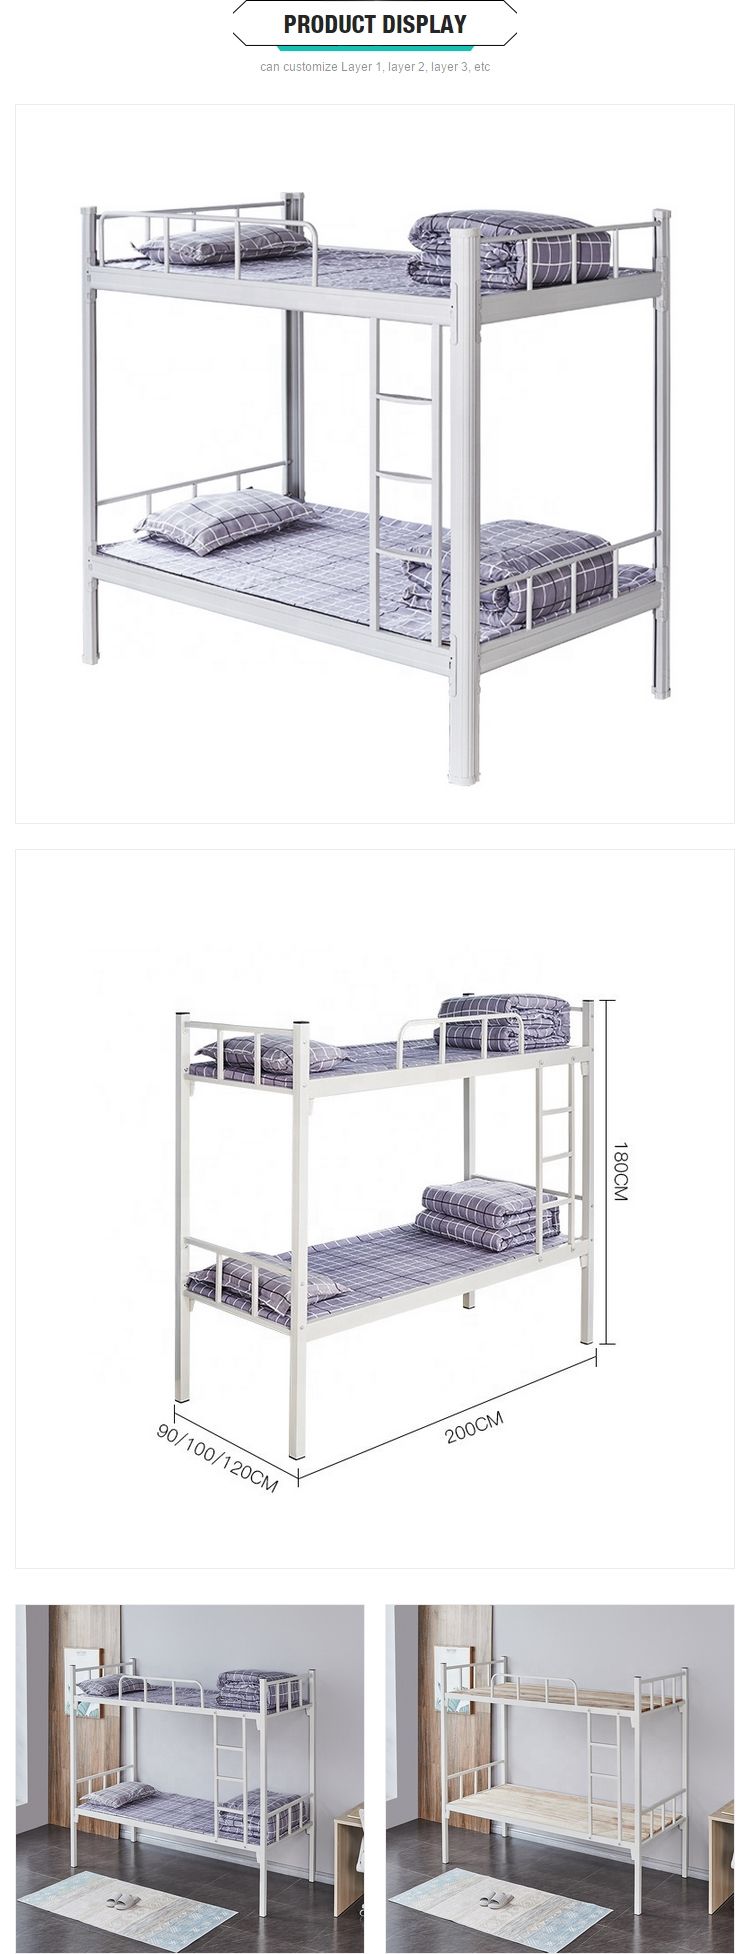 Factory Wholesale Double Comfortable Dormitory Metal Steel Student School Bunk Bed